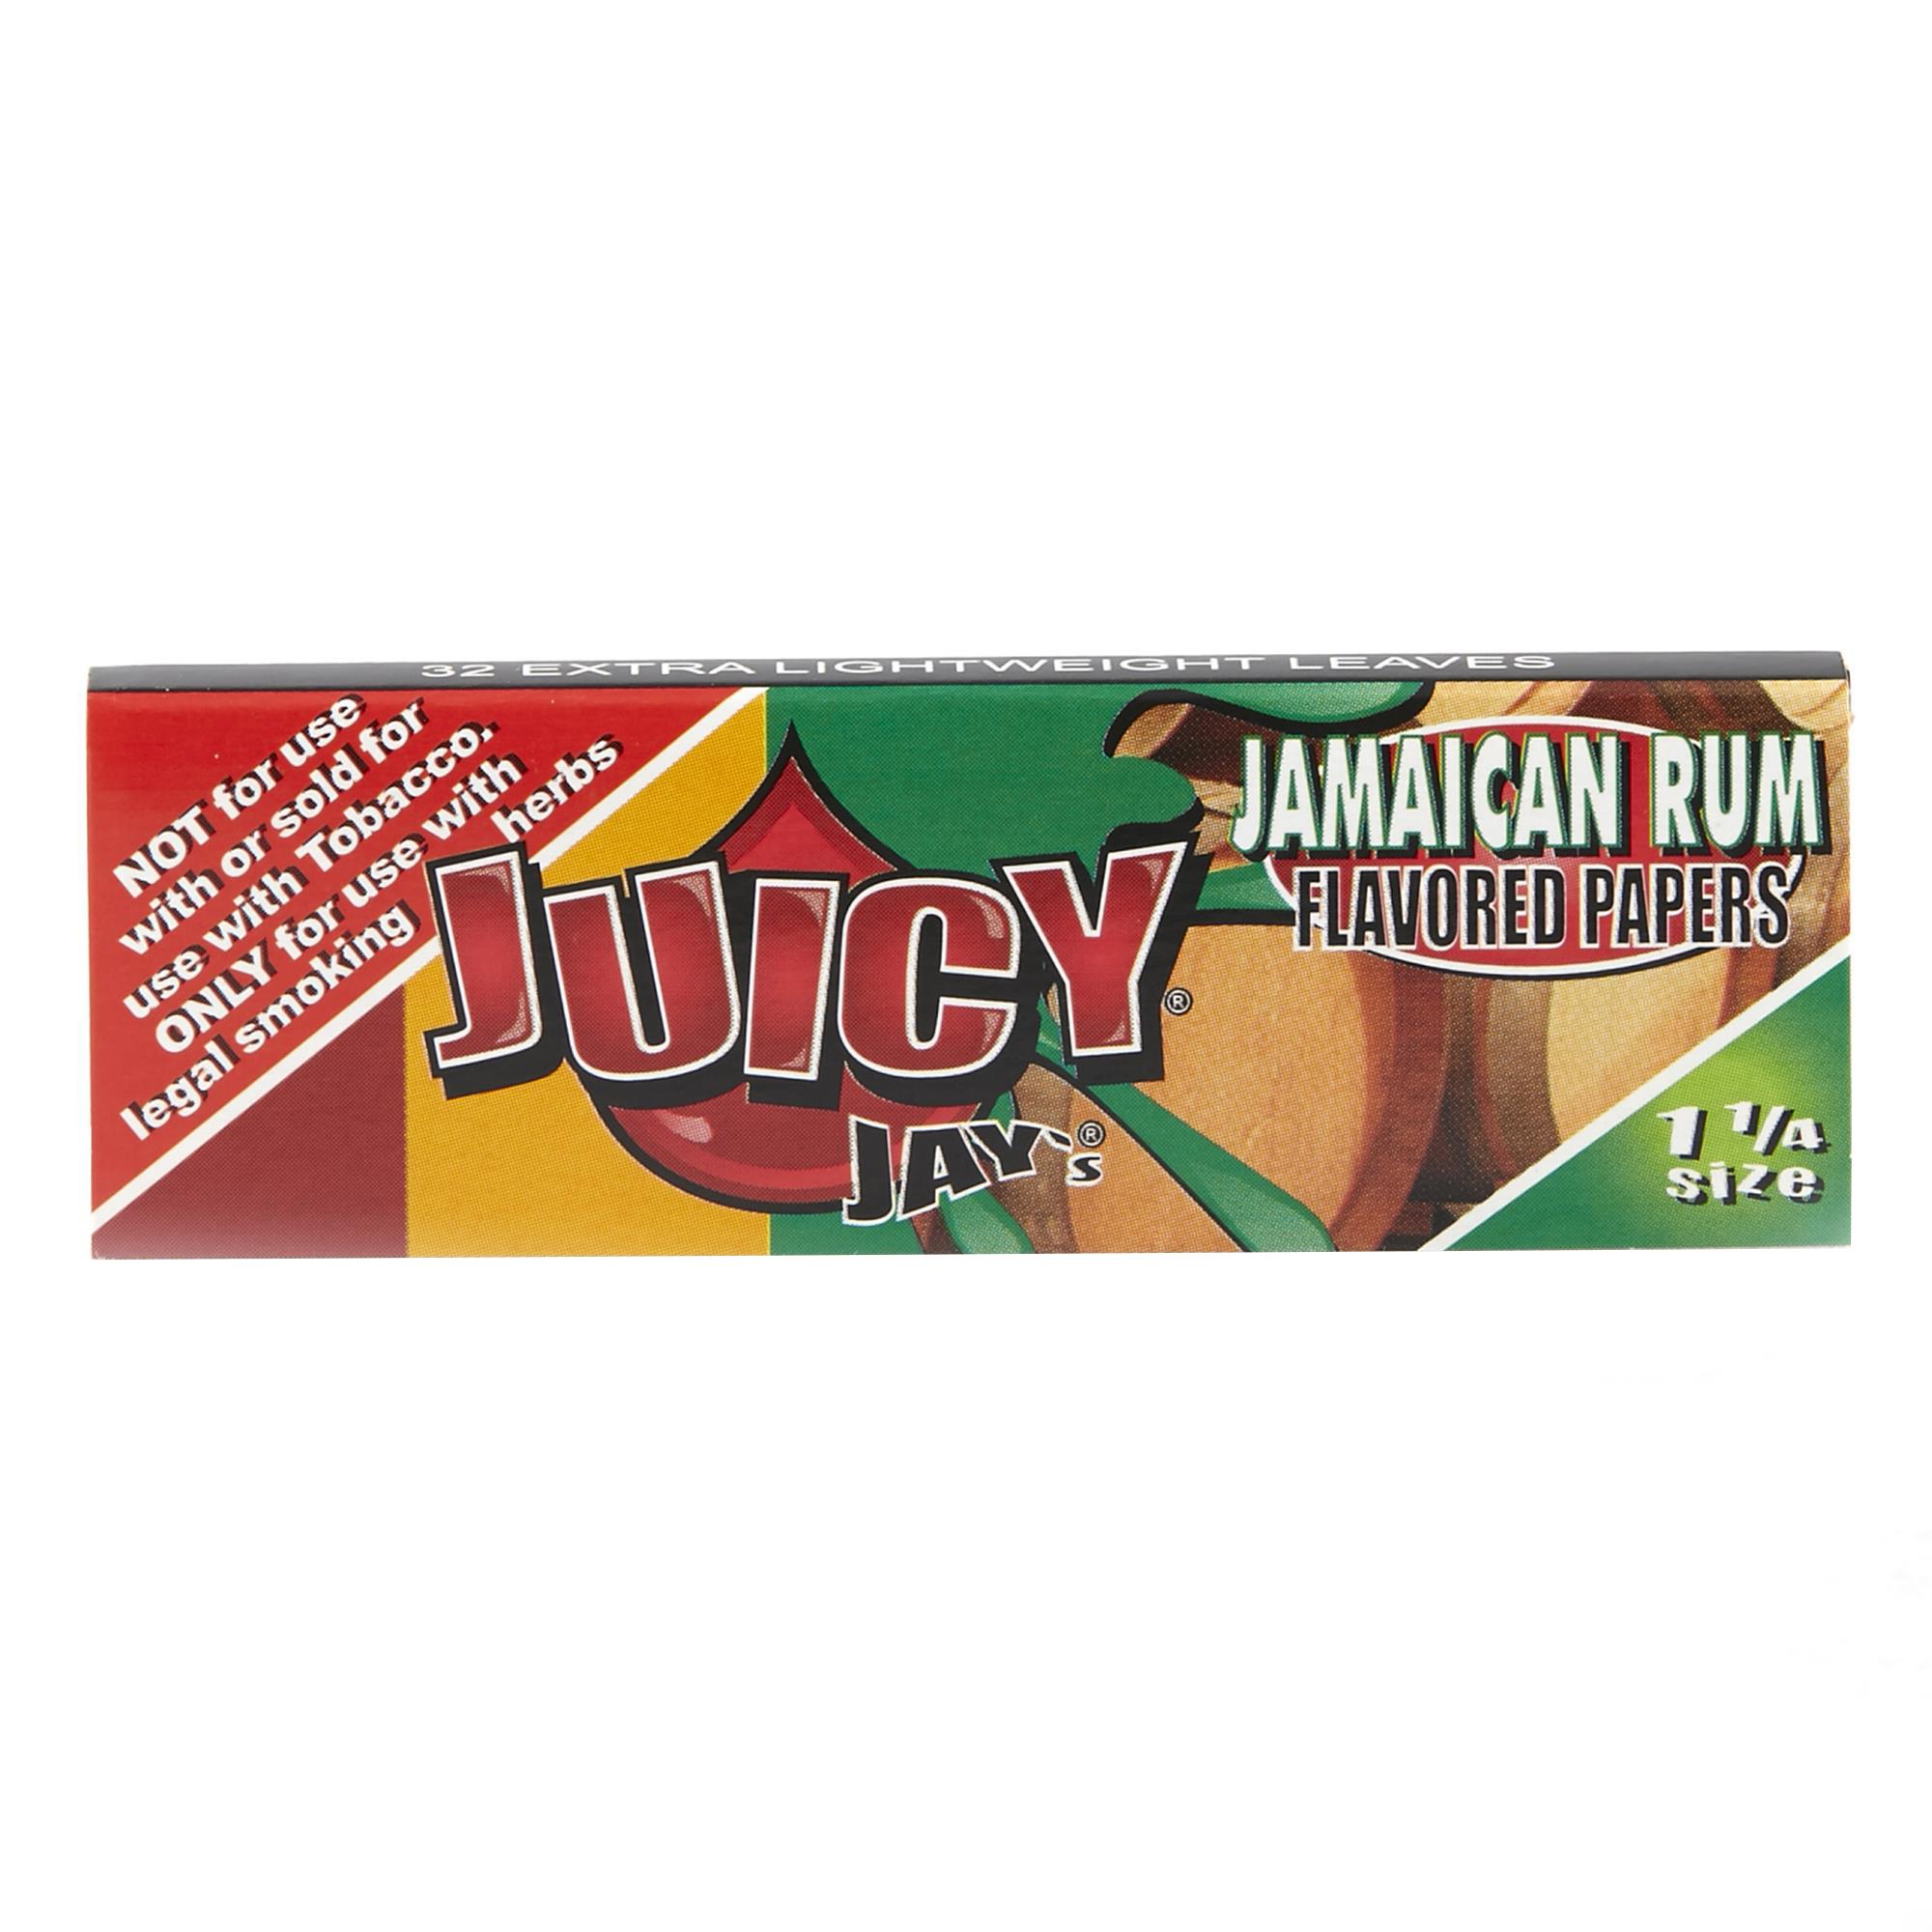 JUICY JAYS JAMAICAN RUM